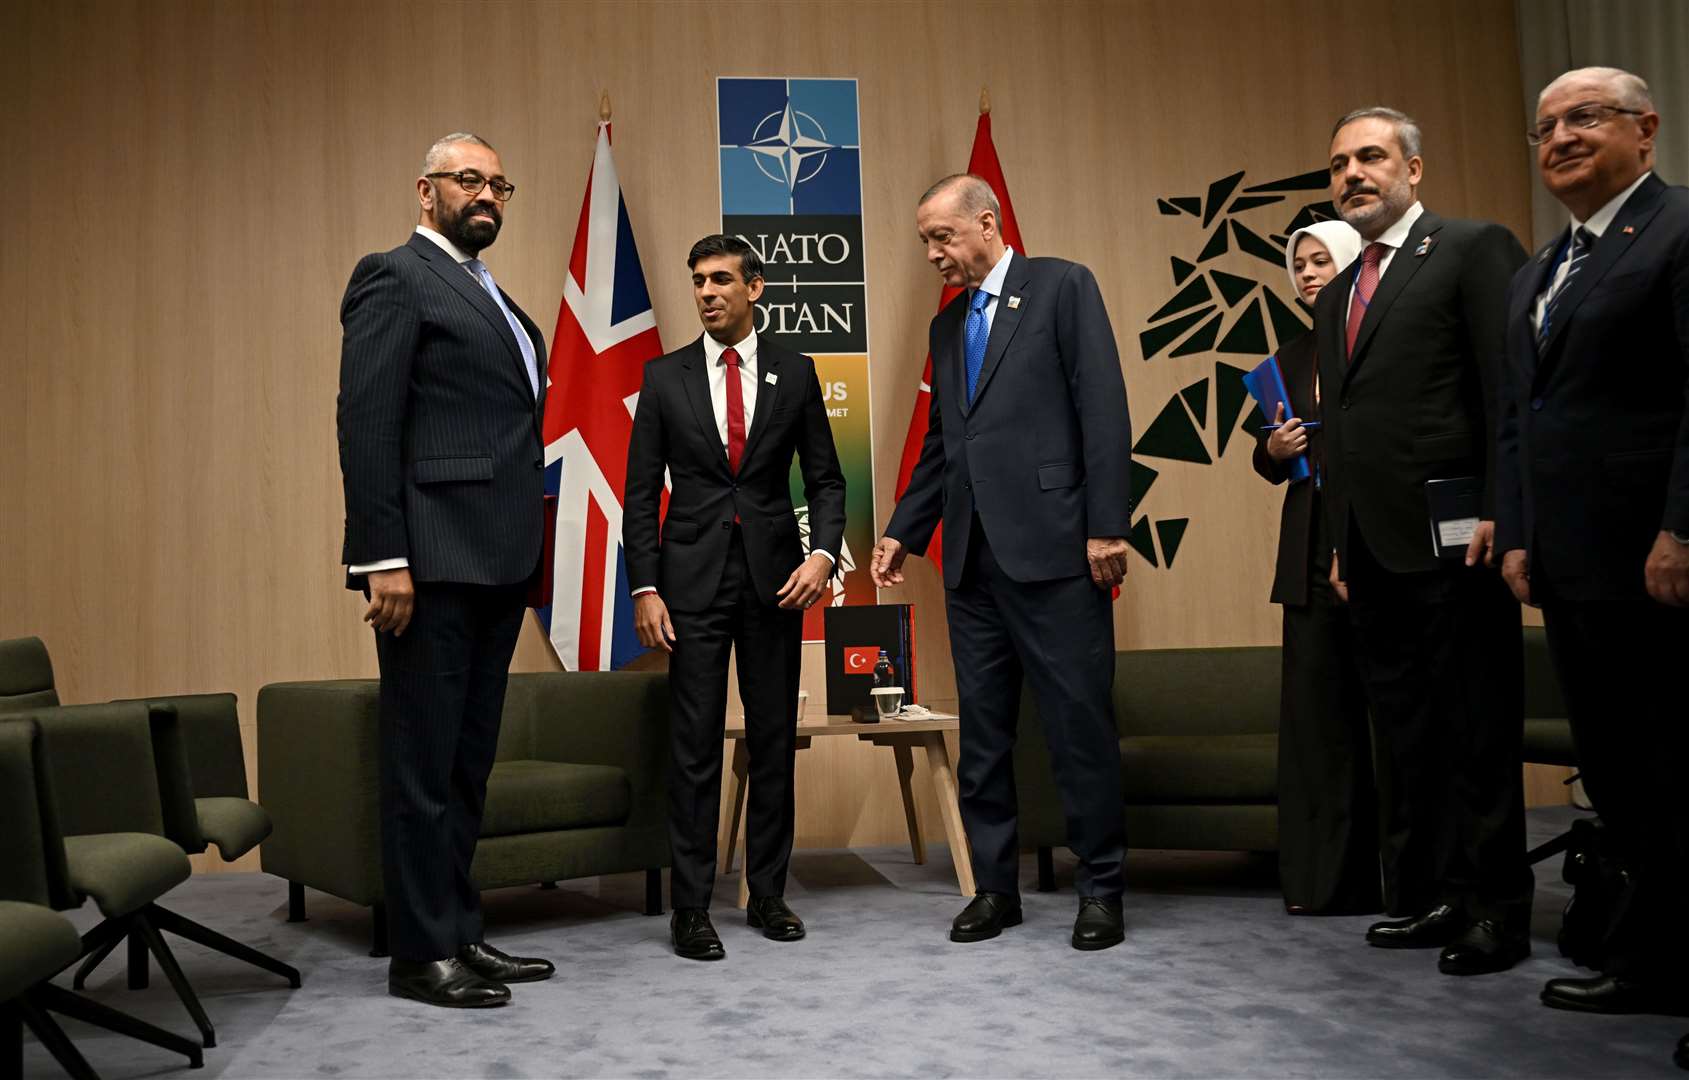 Prime Minister Rishi Sunak met with Turkey’s President Recep Tayyip Erdogan at the Nato summit (Paul Ellis/PA)